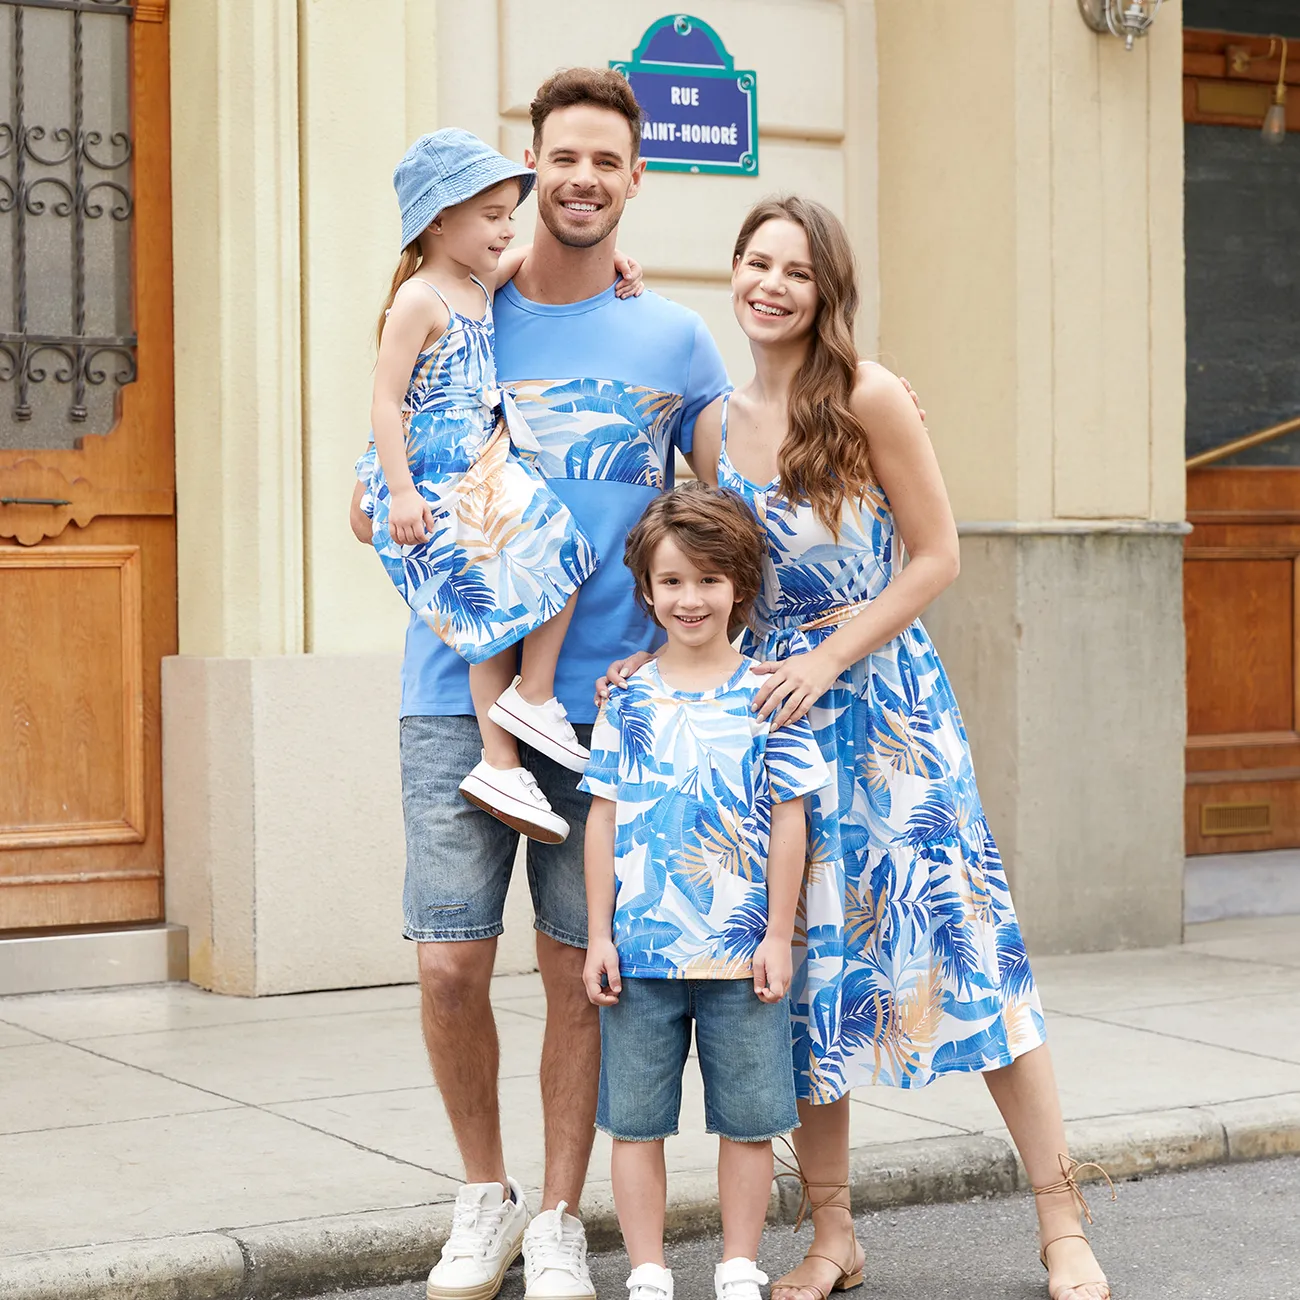 Familien-Looks Tropische Pflanzen und Blumen Tanktop Familien-Outfits Sets blau big image 1